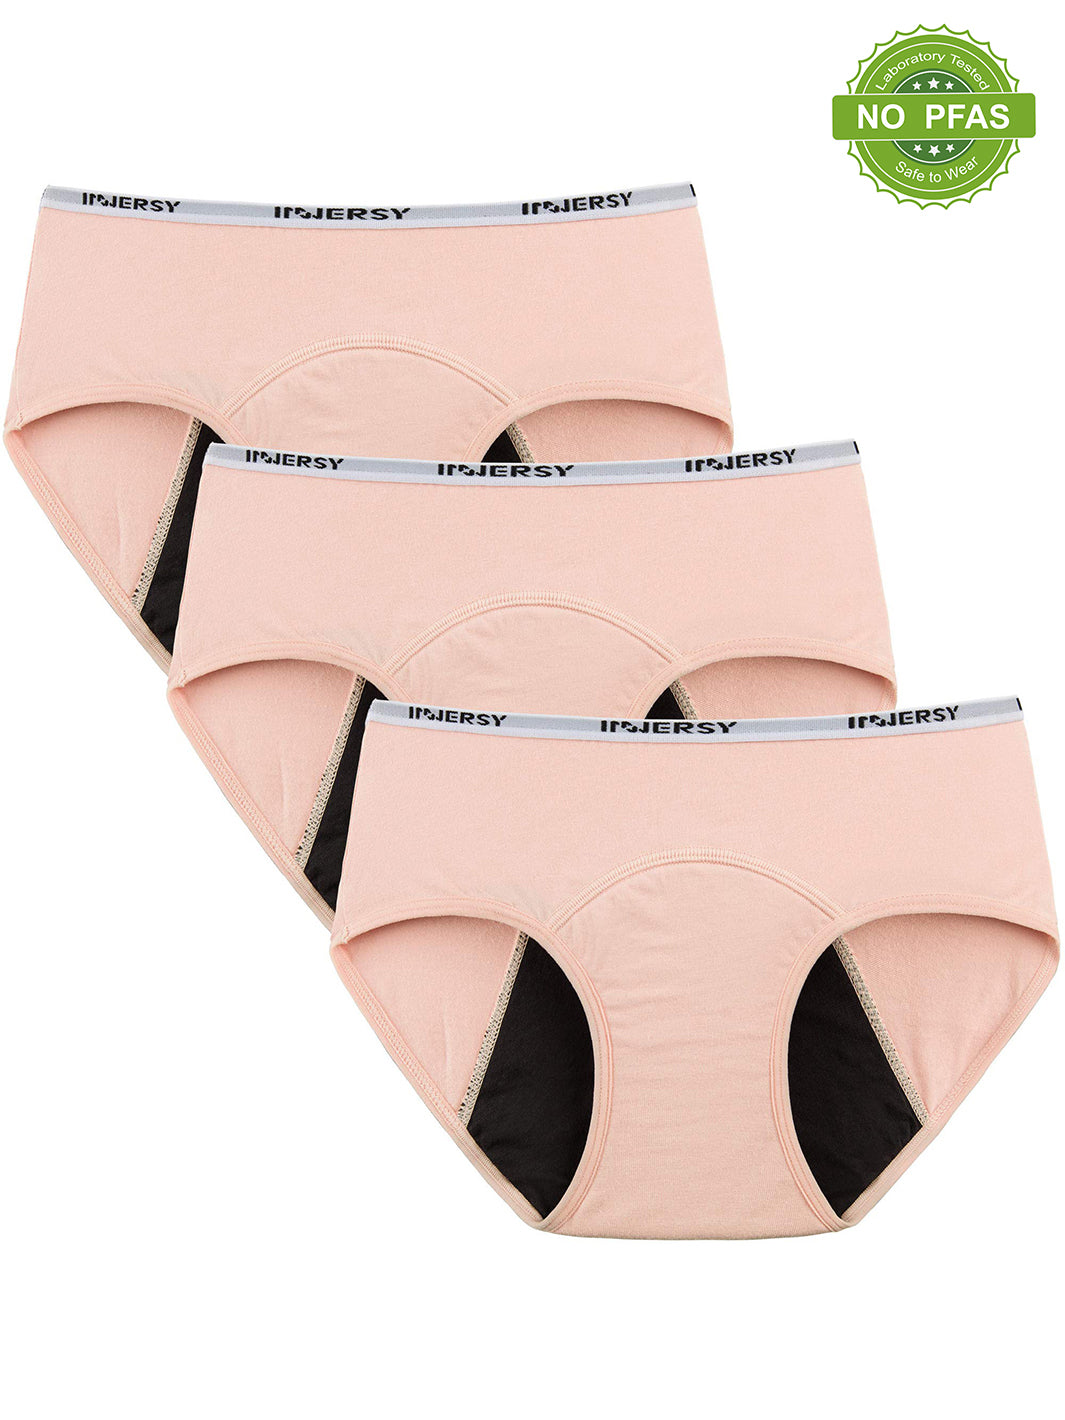 Buy INNERSY Big Girls' Panties Menstrual Period Panties Protective